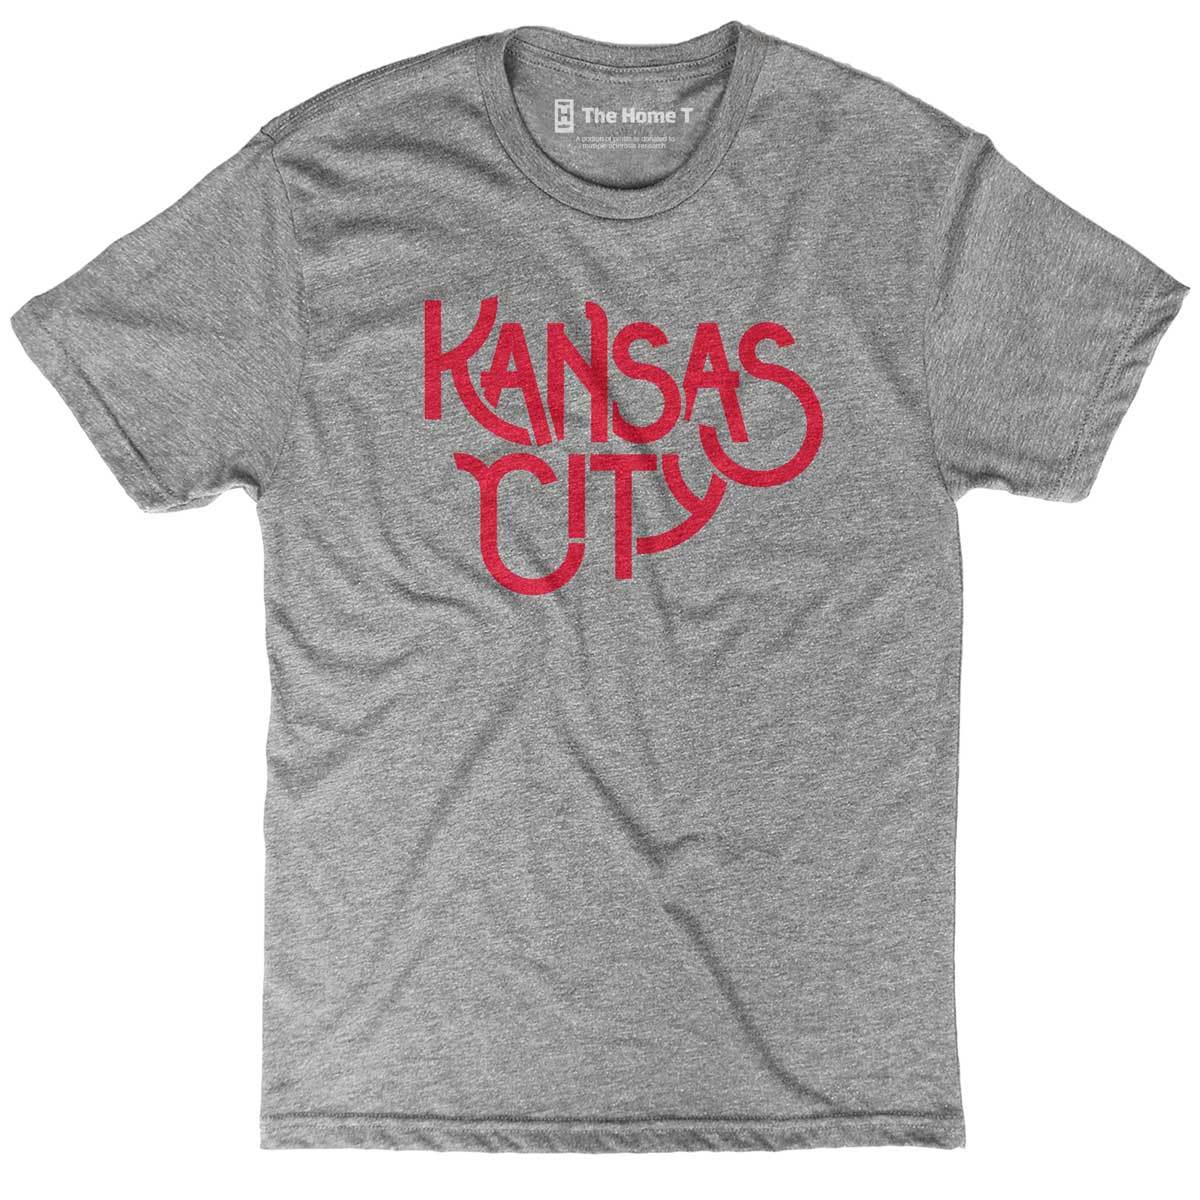 Kansas City Pride Crew neck The Home T XS T-Shirt